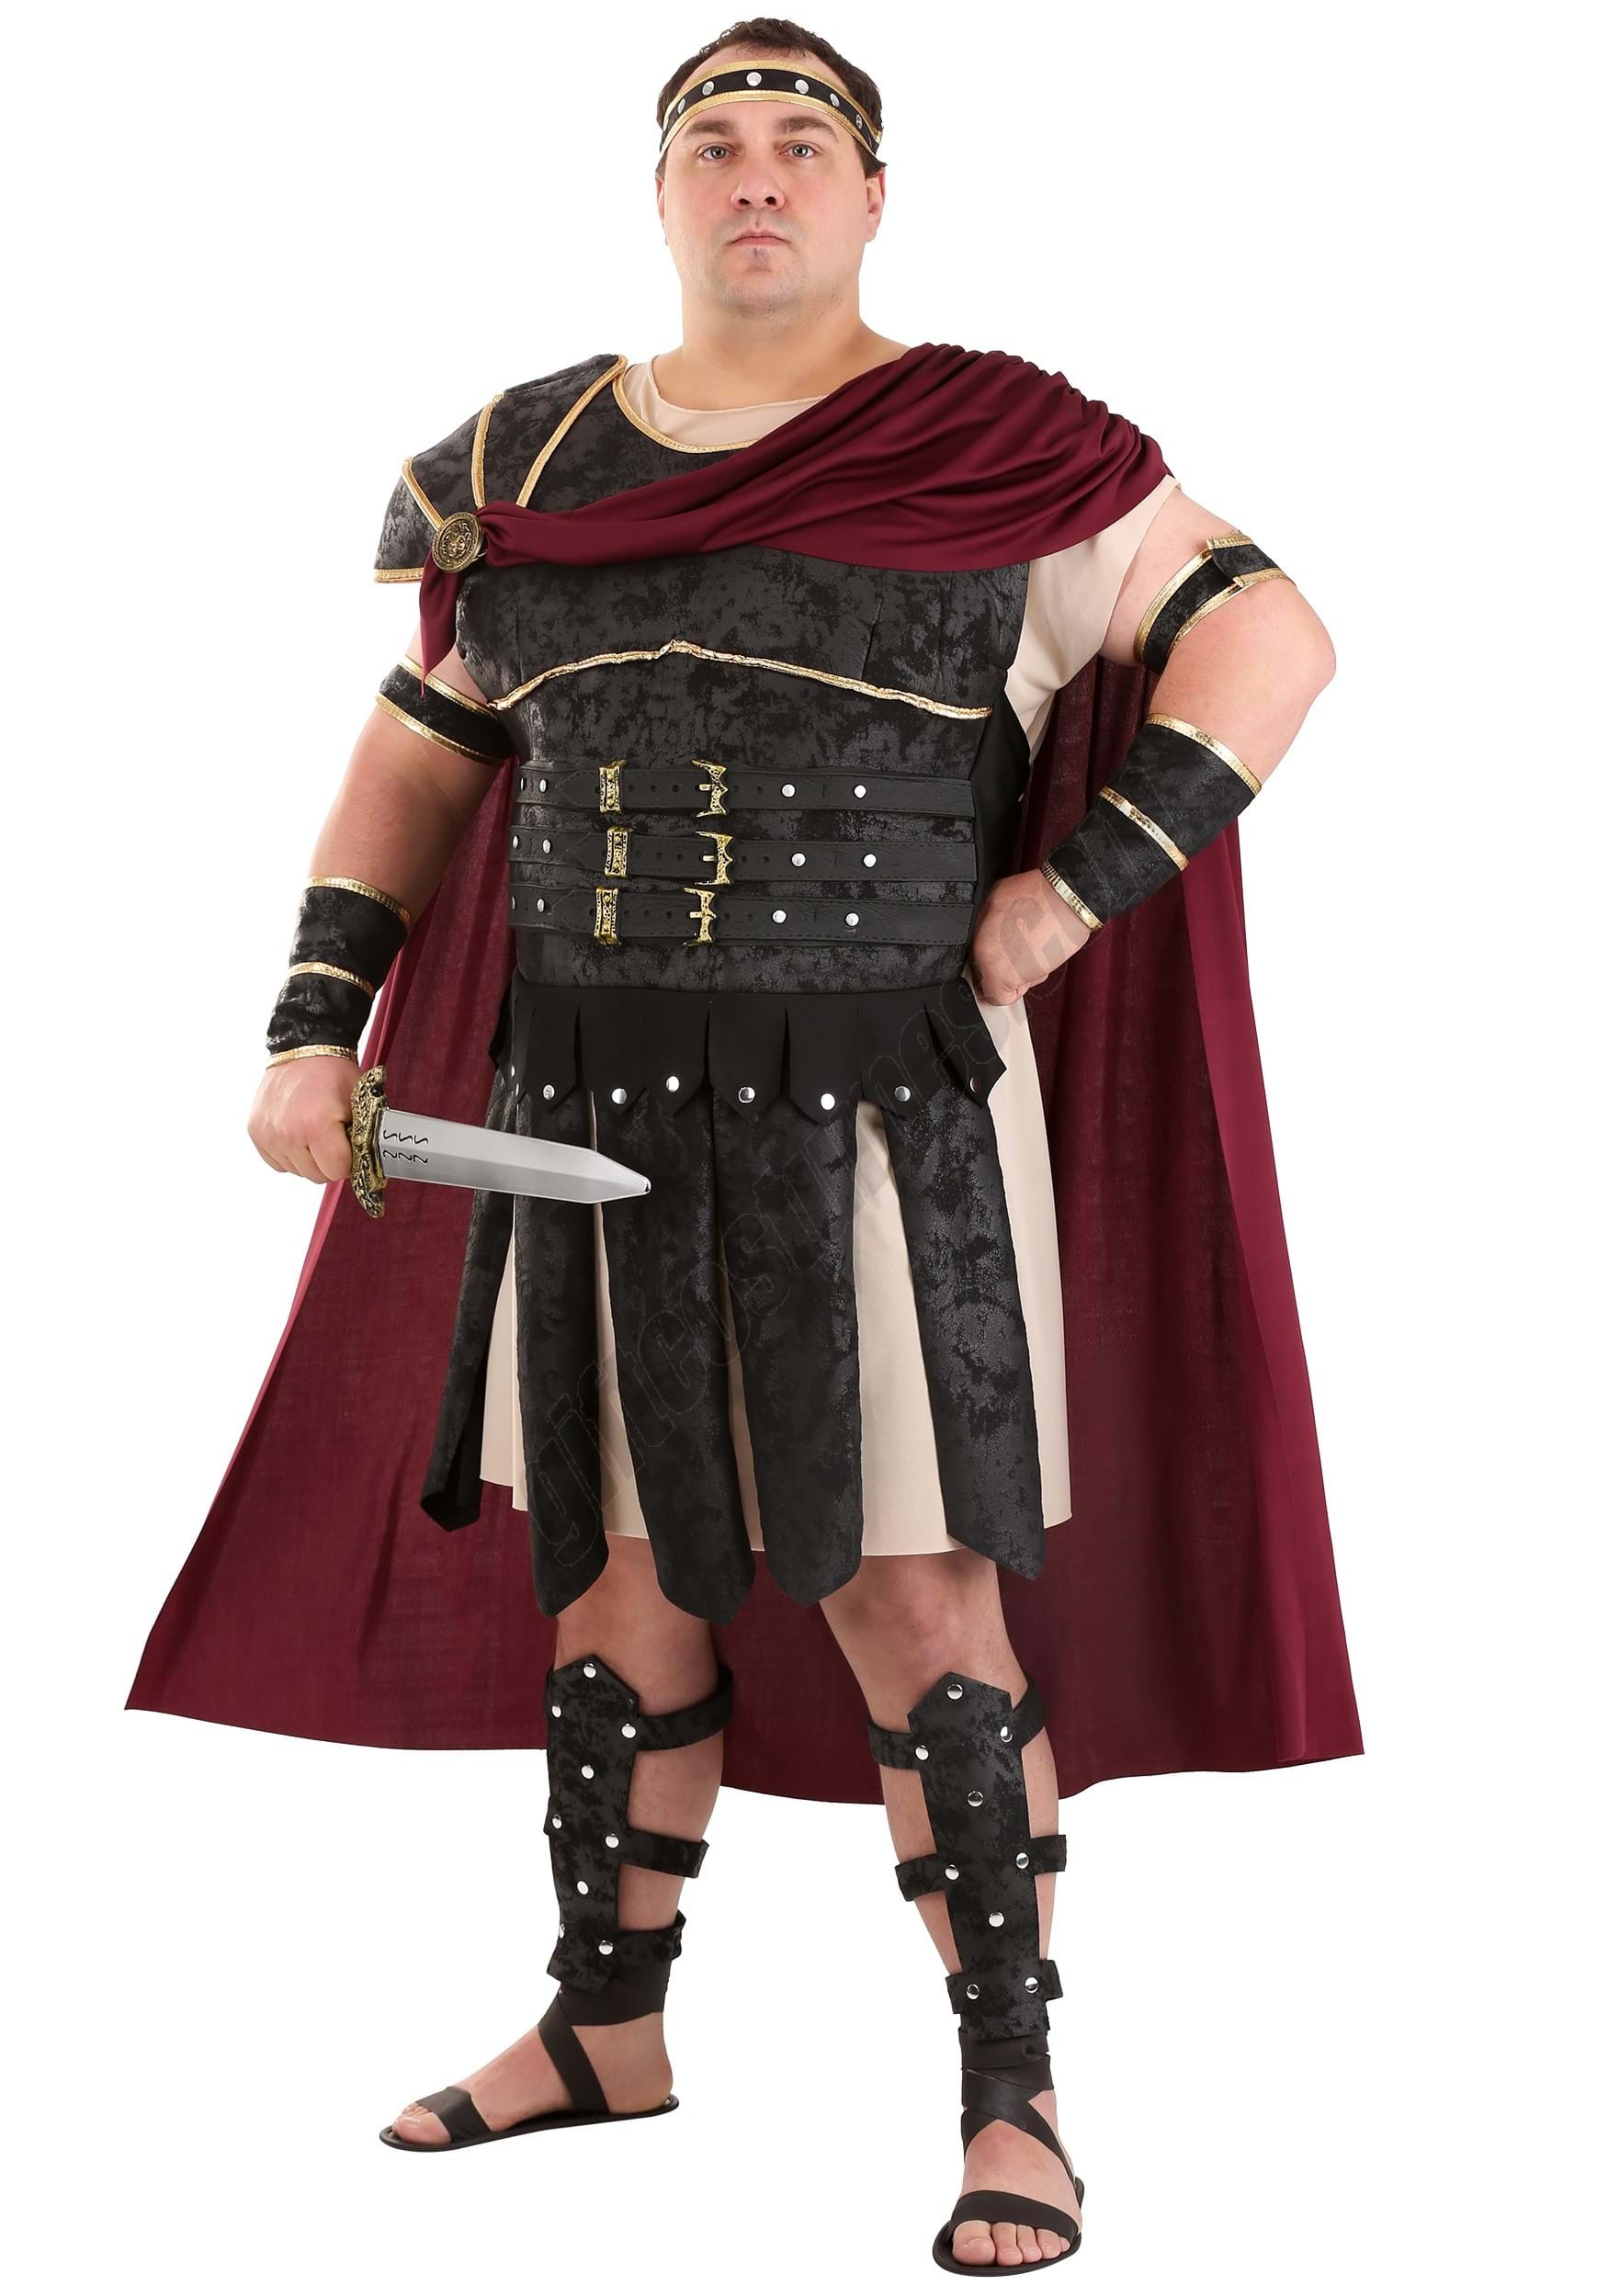 Plus Size Roman Gladiator Costume Promotions - Plus Size Roman Gladiator Costume Promotions